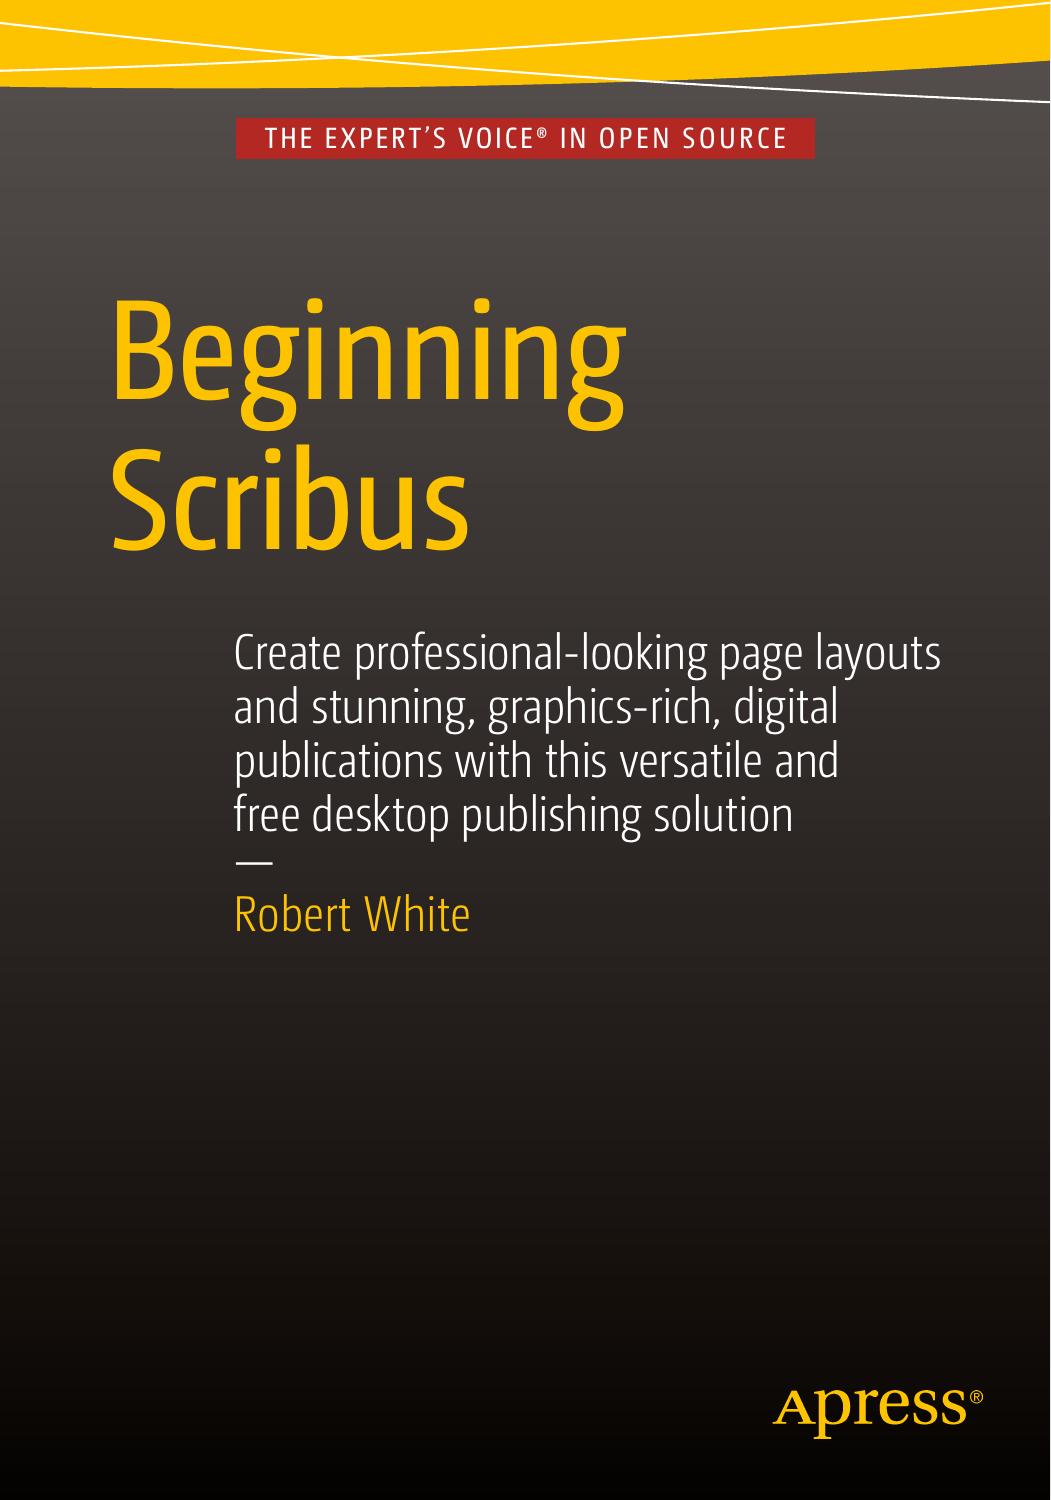 Beginning Scribus by Robert White